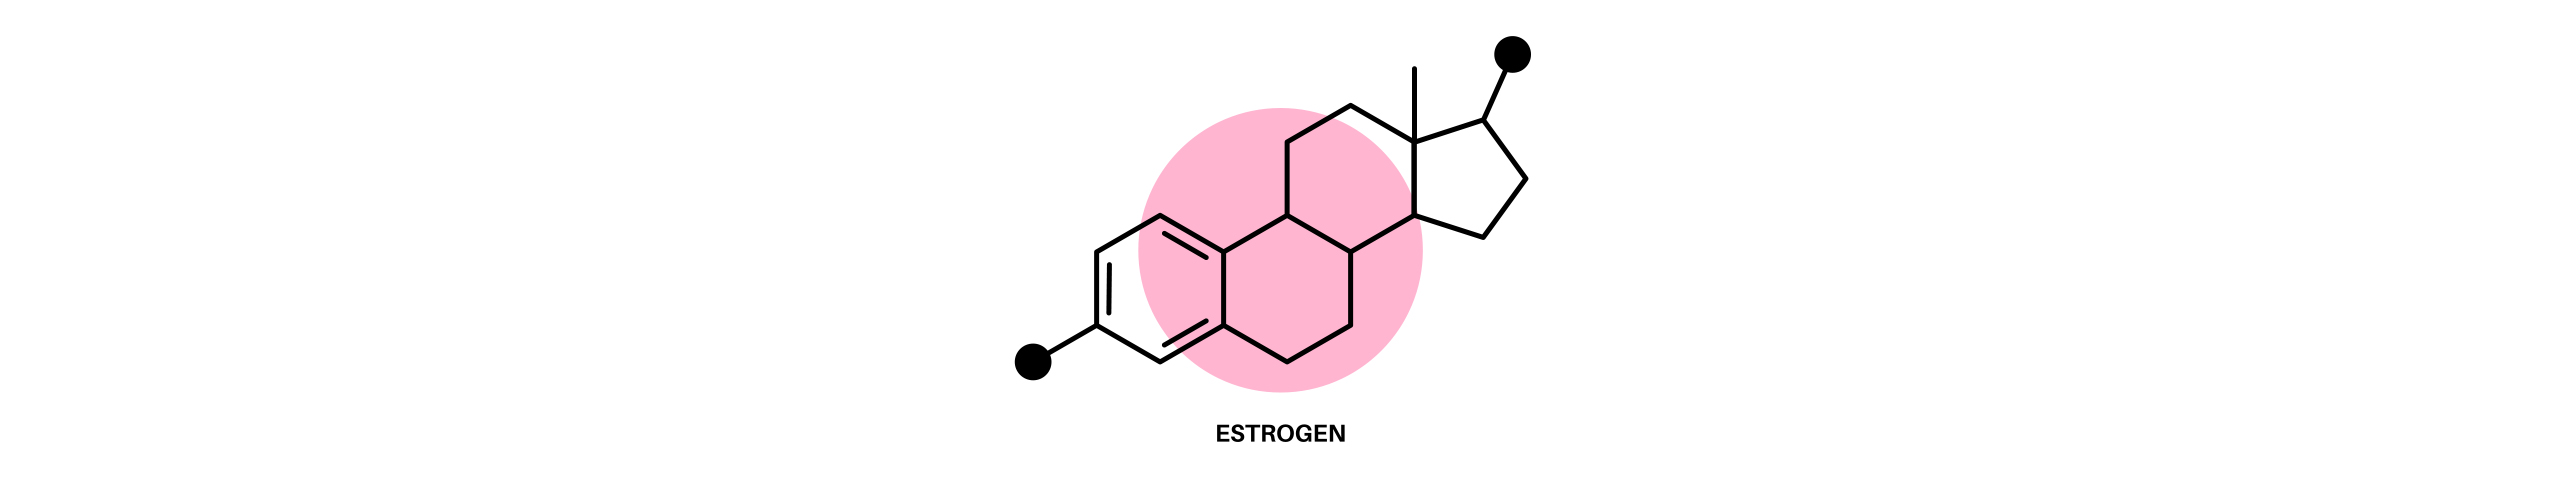 Daling hormoon oestrogeen levert risico’s op